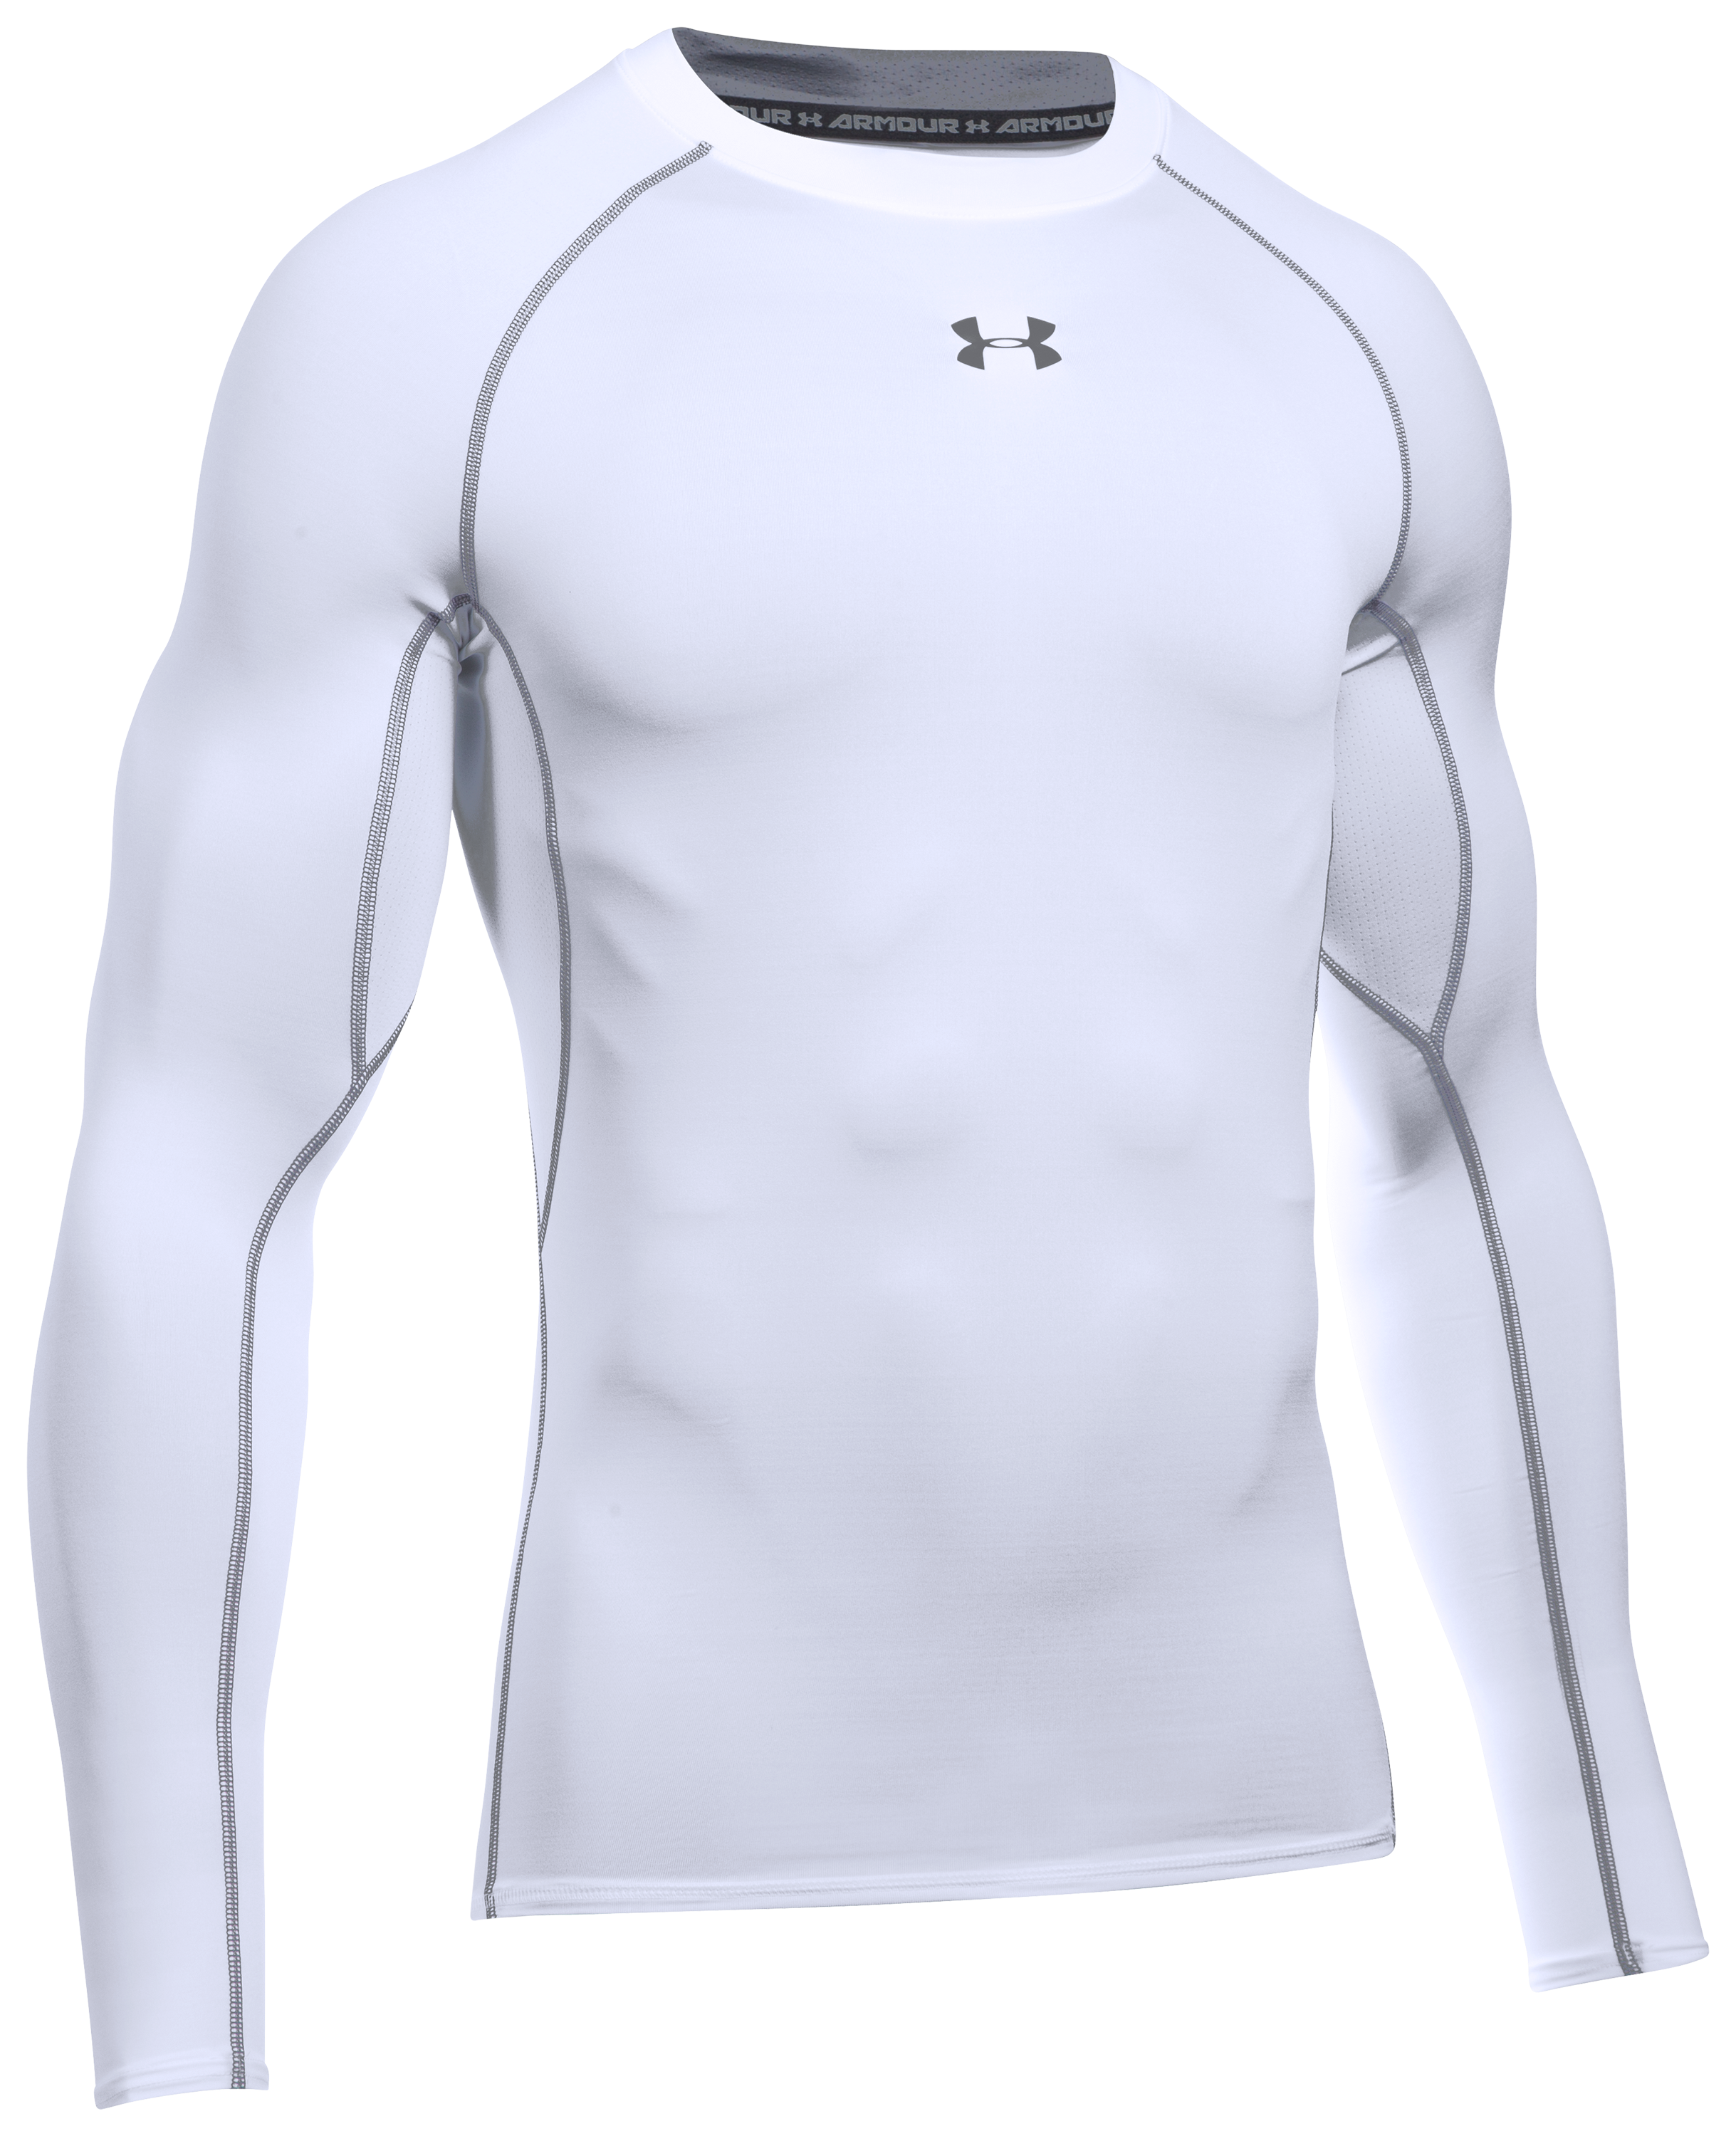 Under Armour HeatGear Armour Compression Long-Sleeve T-Shirt for Men